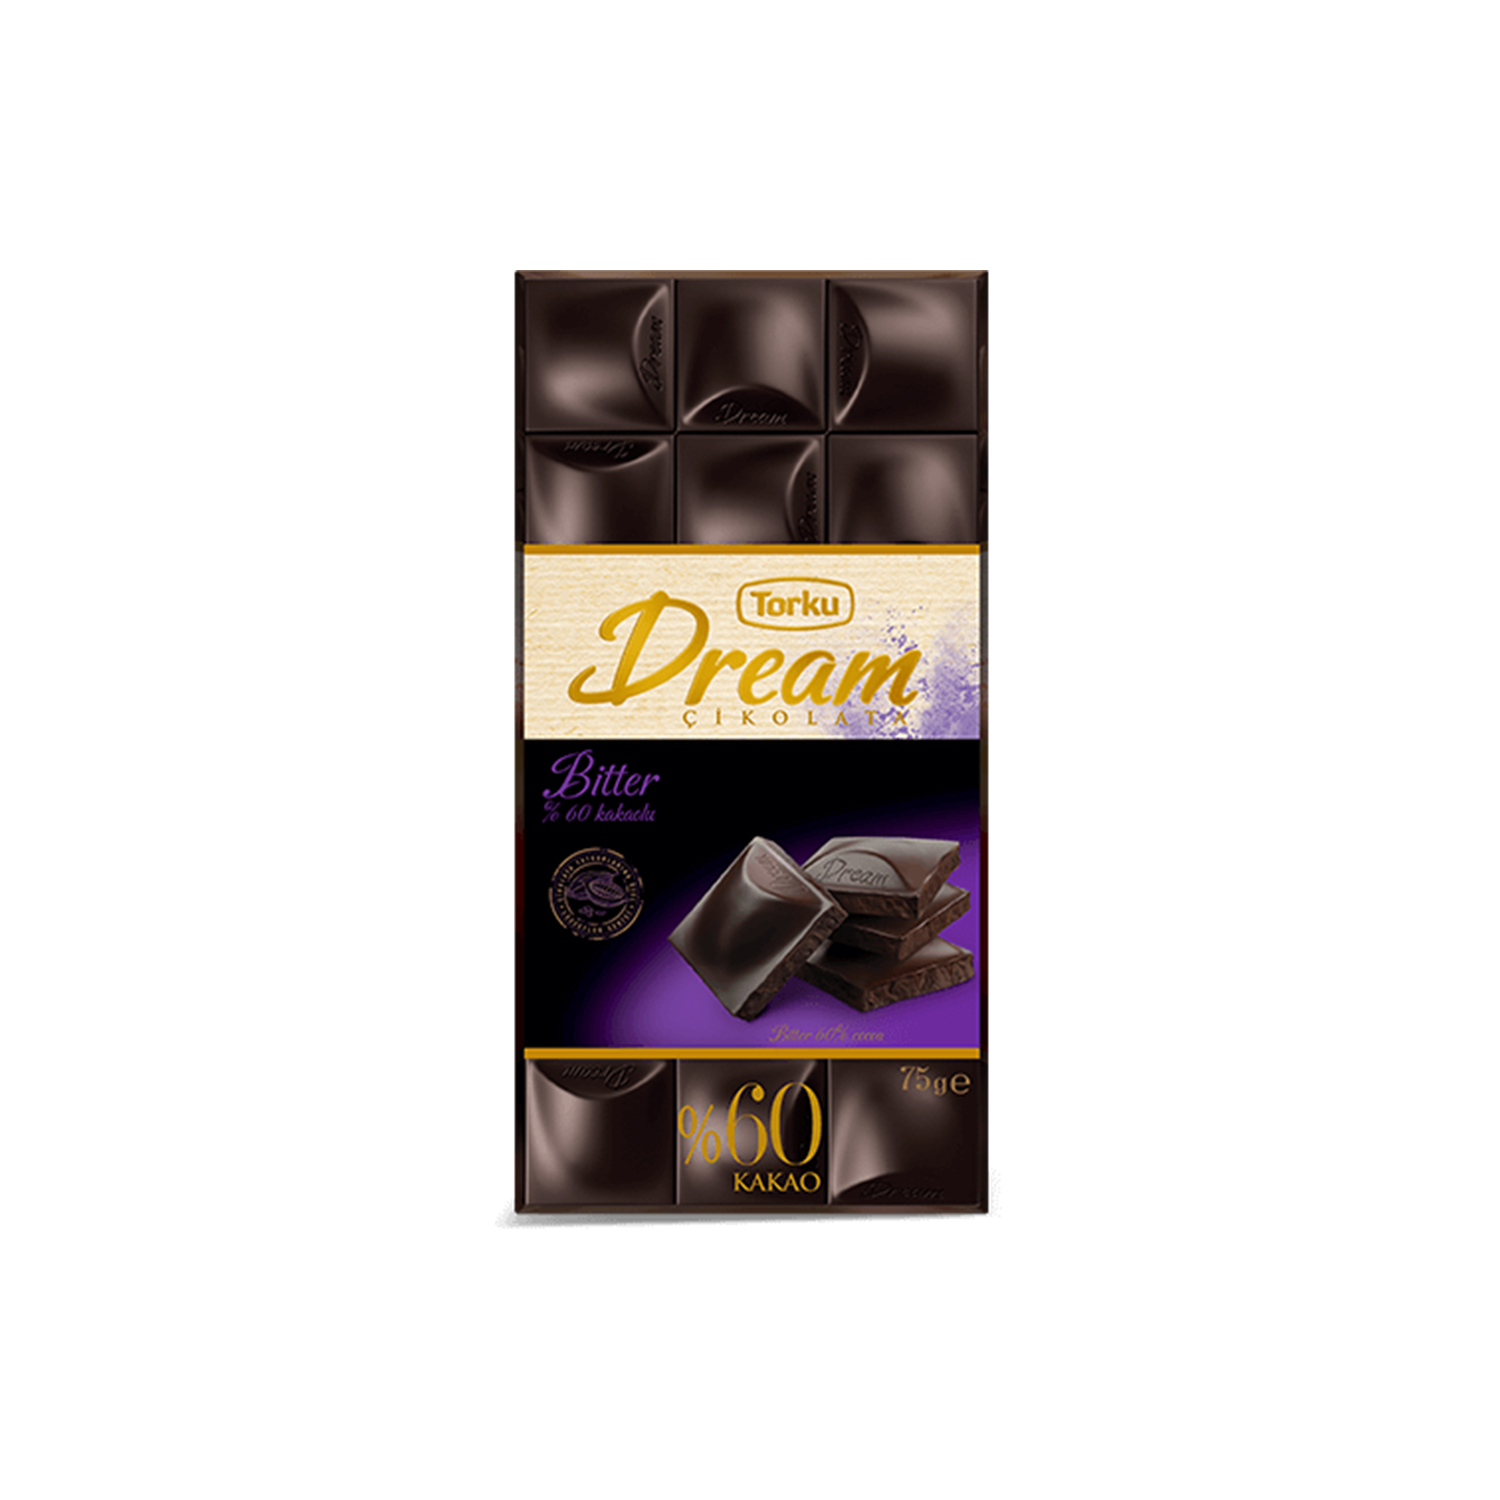 Torku Dream %60 Bitter Çikolata 75 Gr